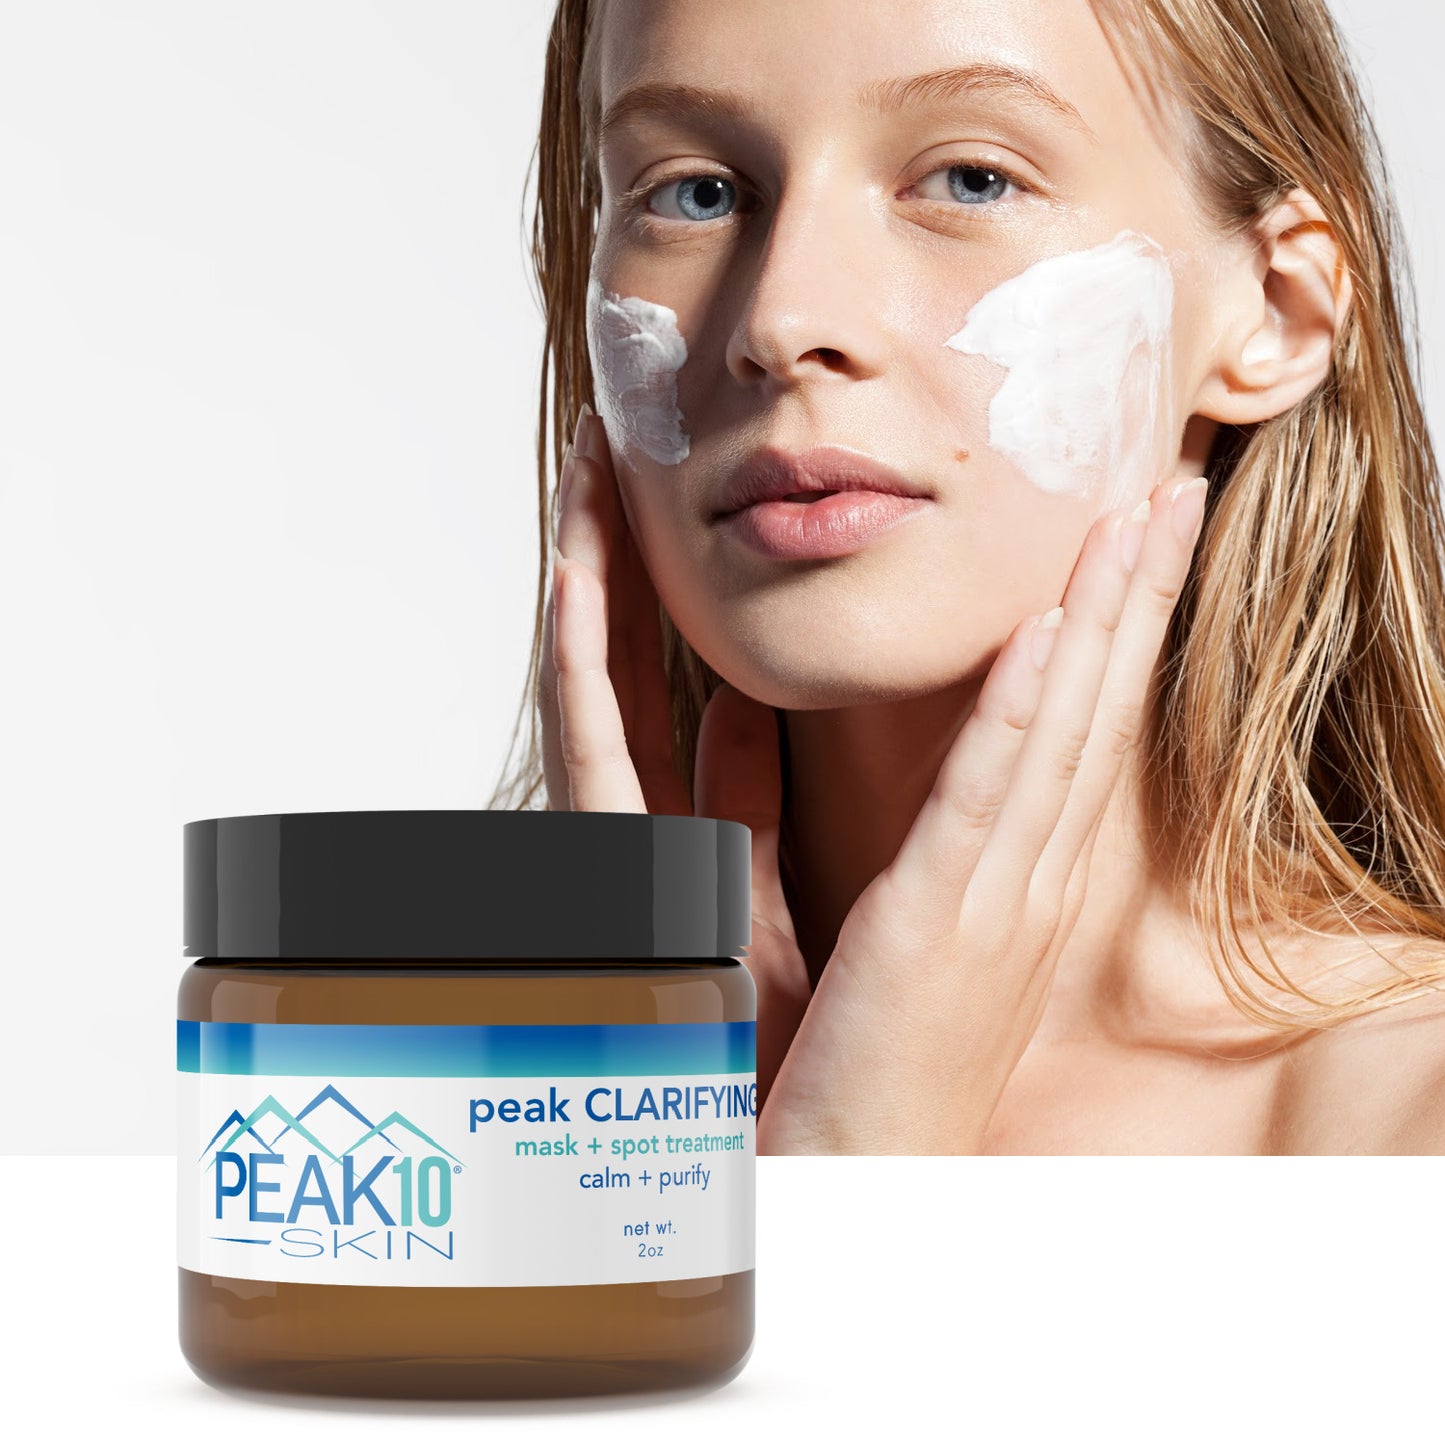 peak CLARIFYING mask + spot treatment | calm + purify 2oz